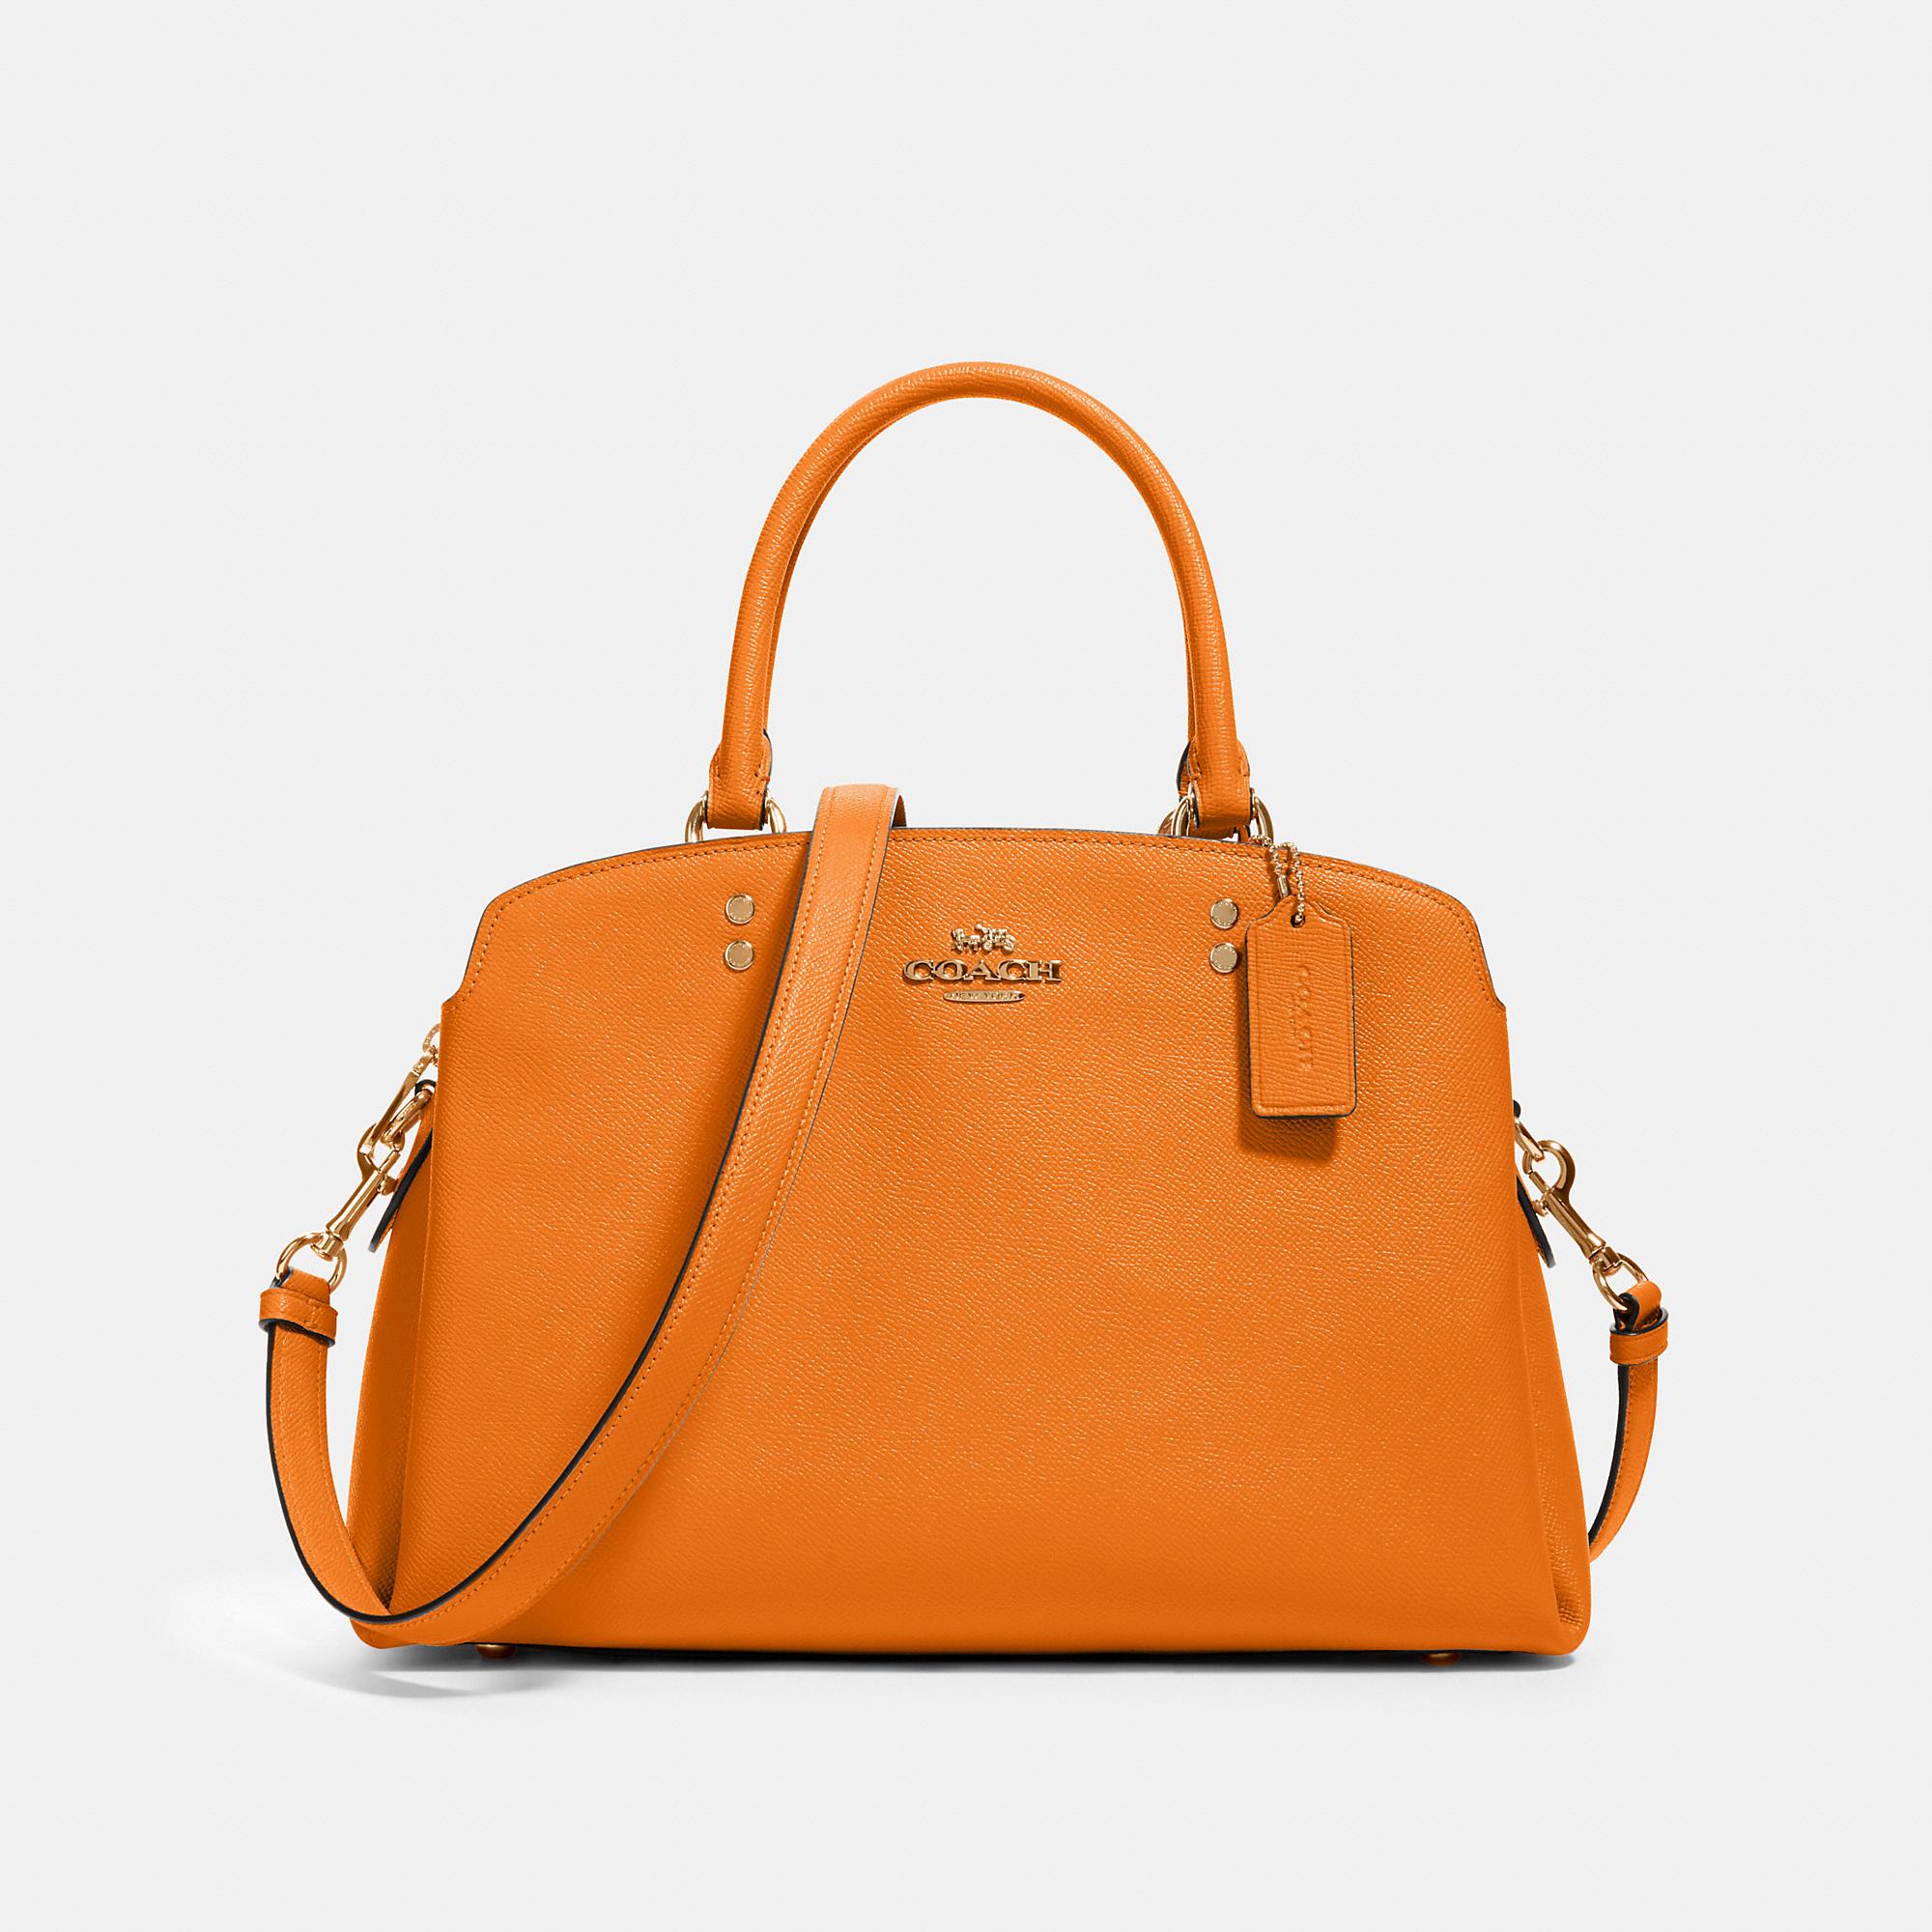 orange coach handbag